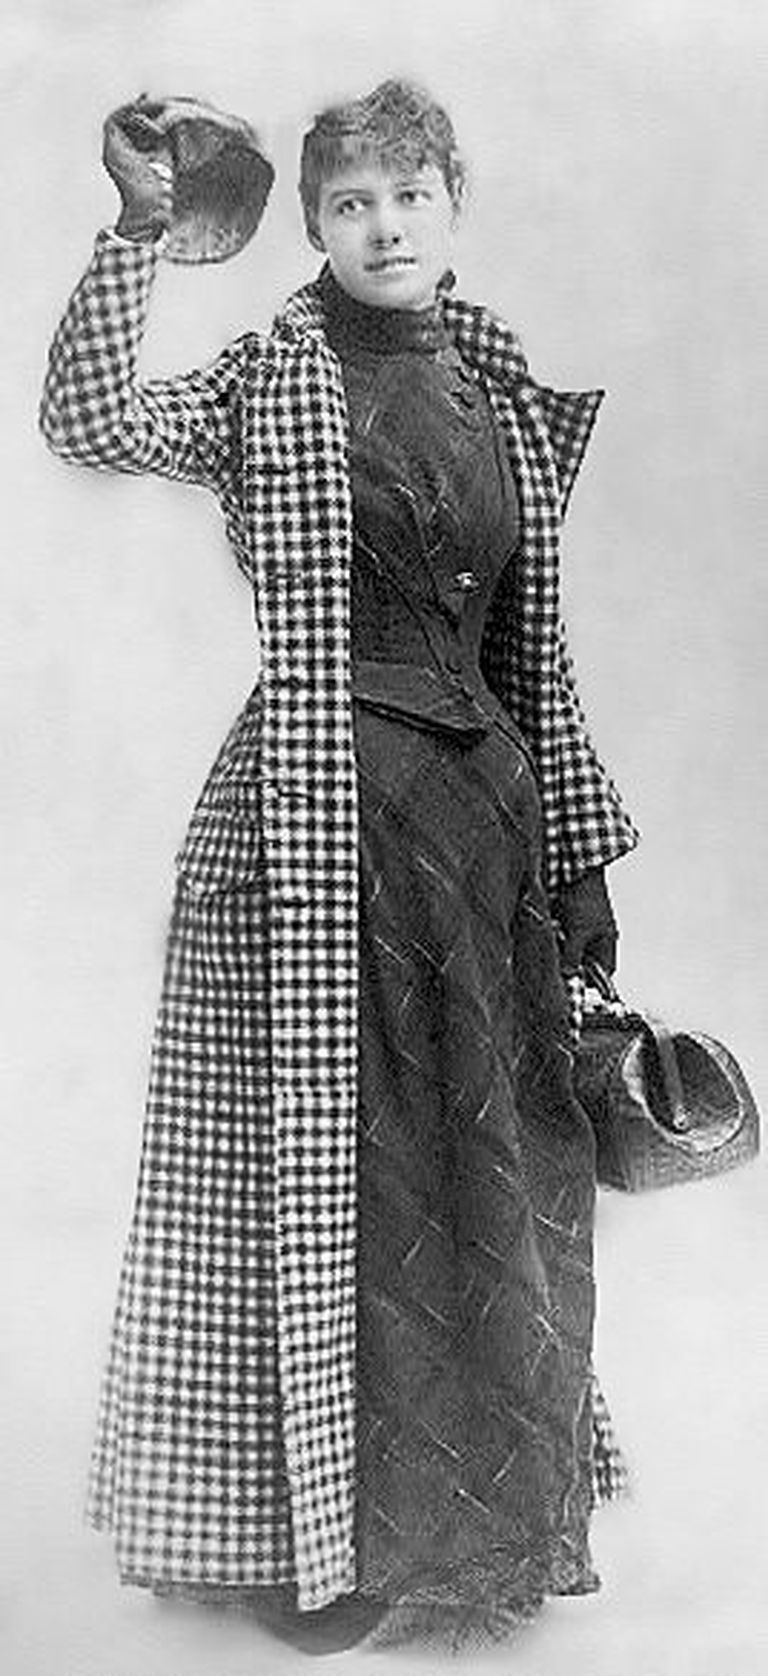 Elizabeth Cochran (Nellie Bly) enne ümbermaailmareisile asumist / wikipedia.org